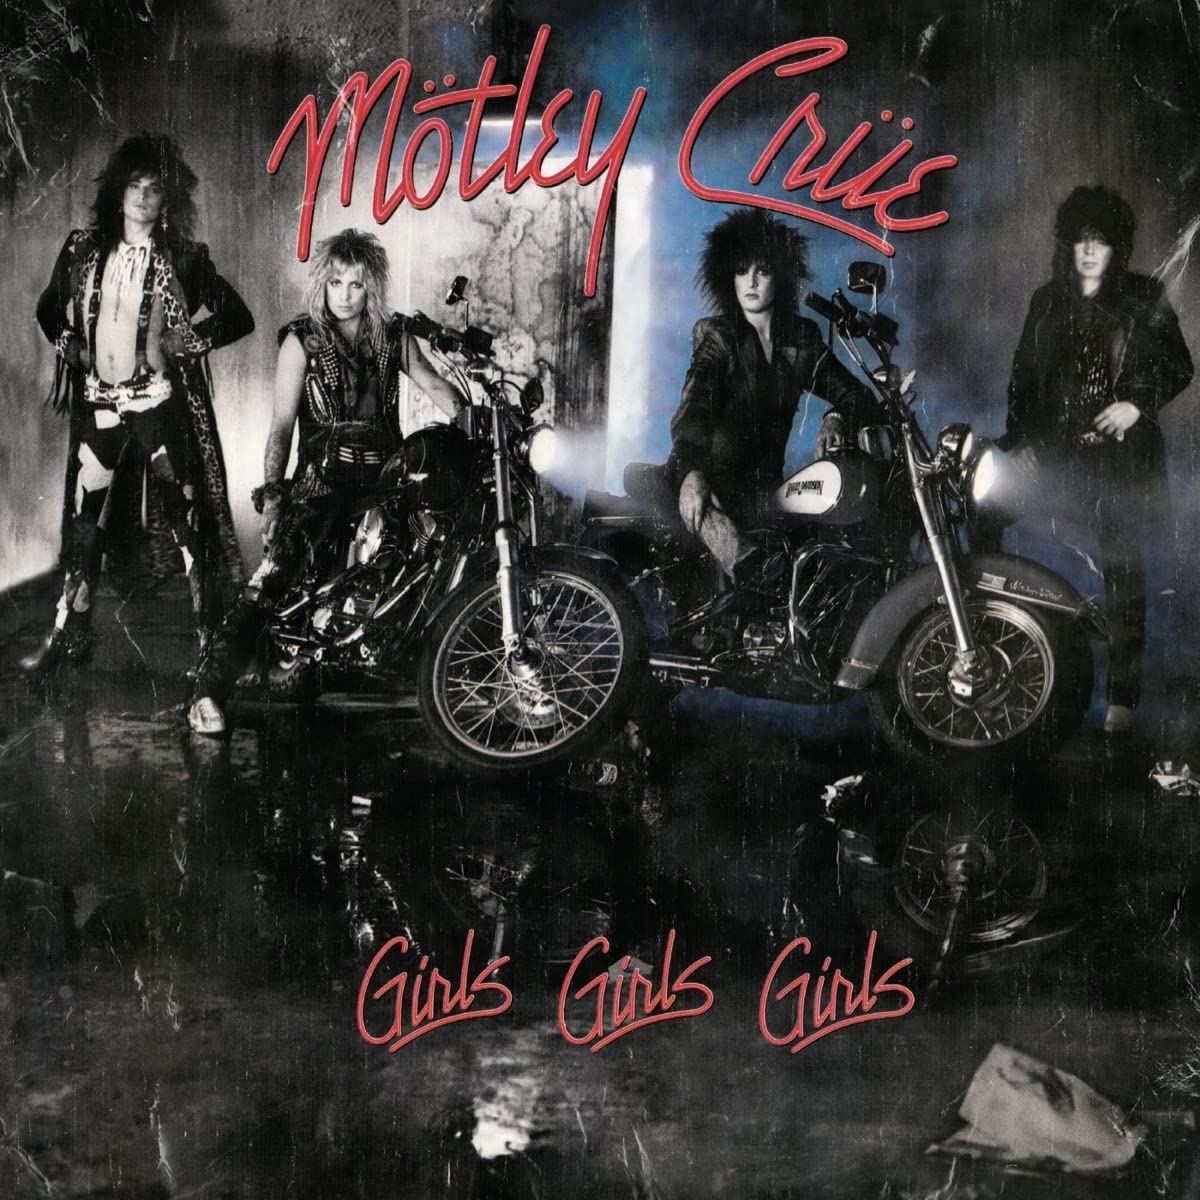 Motley Crue "Girls, Girls, Girls" Remastered Digipak CD